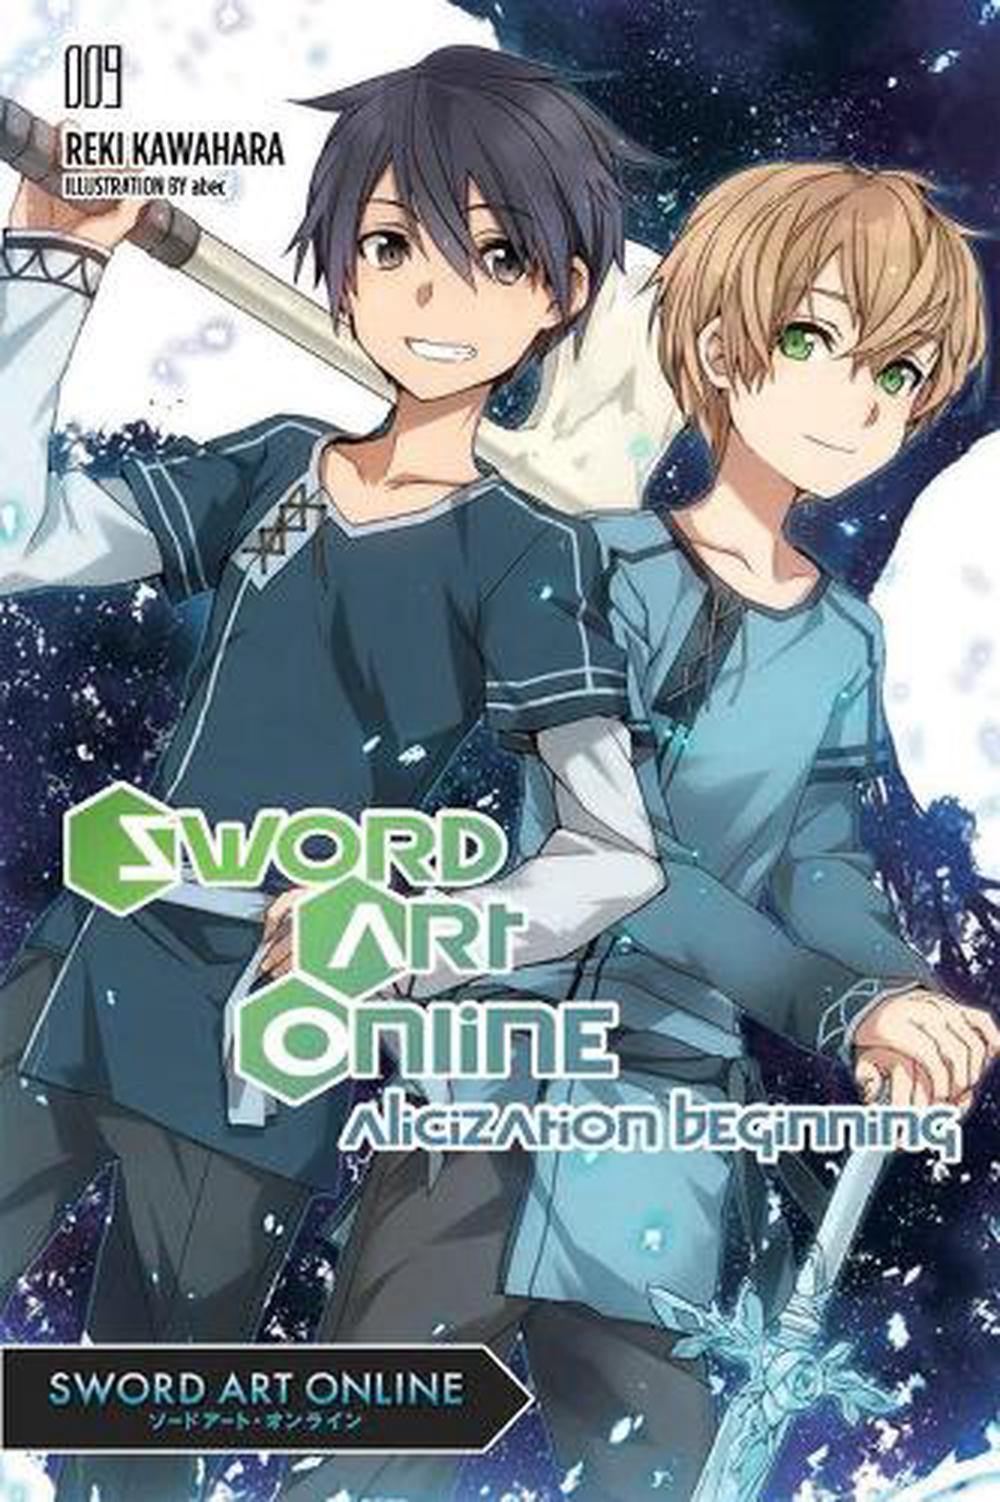 Sword Art Online 9 by Reki Kawahara (English) Paperback